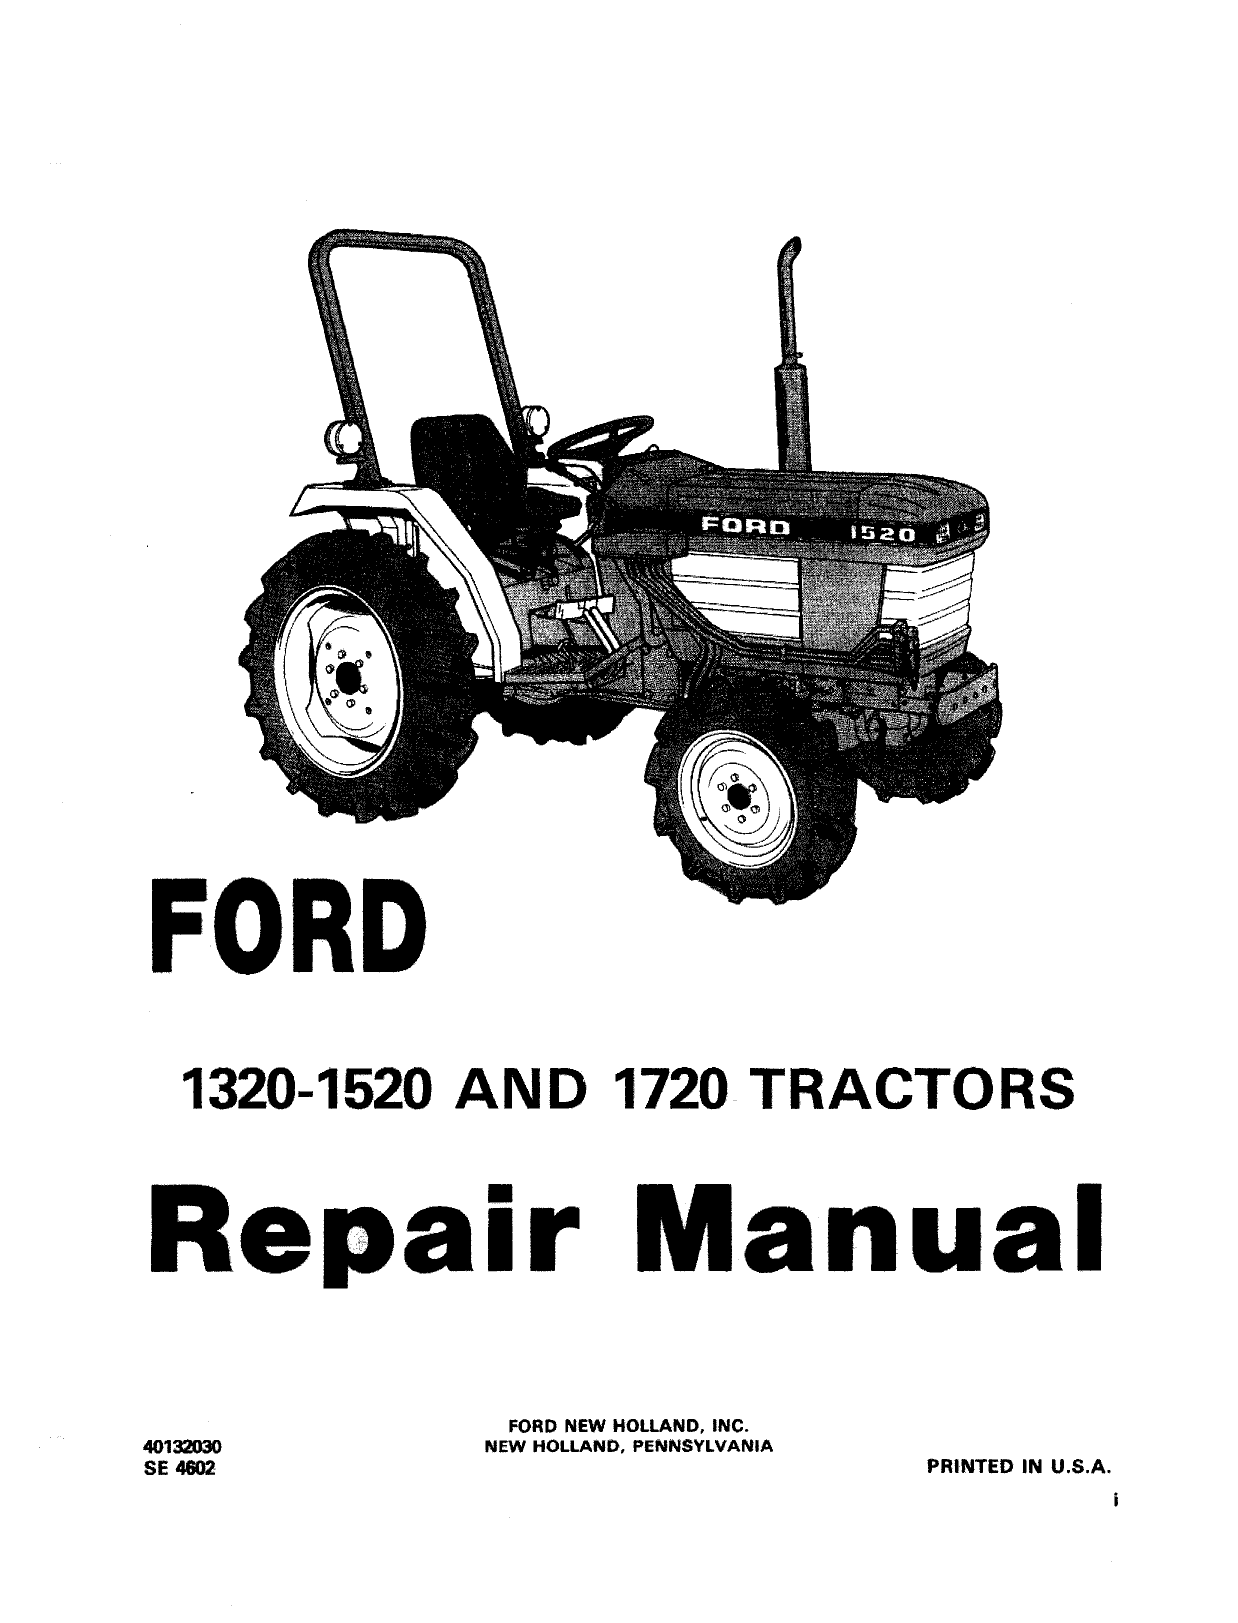 1996-1997 New Holland 1715 tractor repair manual Preview image 2